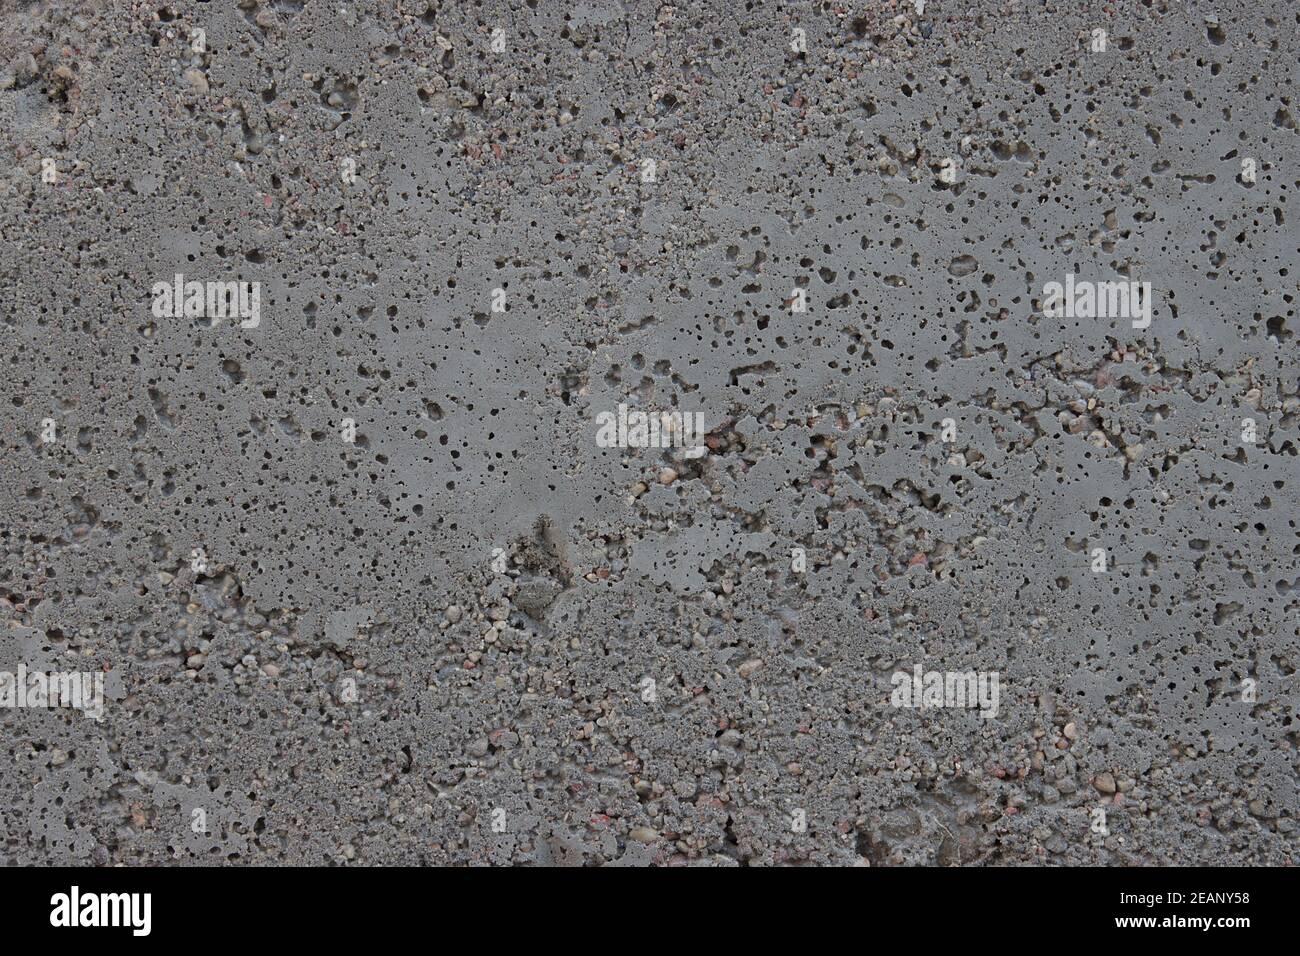 The texture of freshly poured concrete. Stock Photo